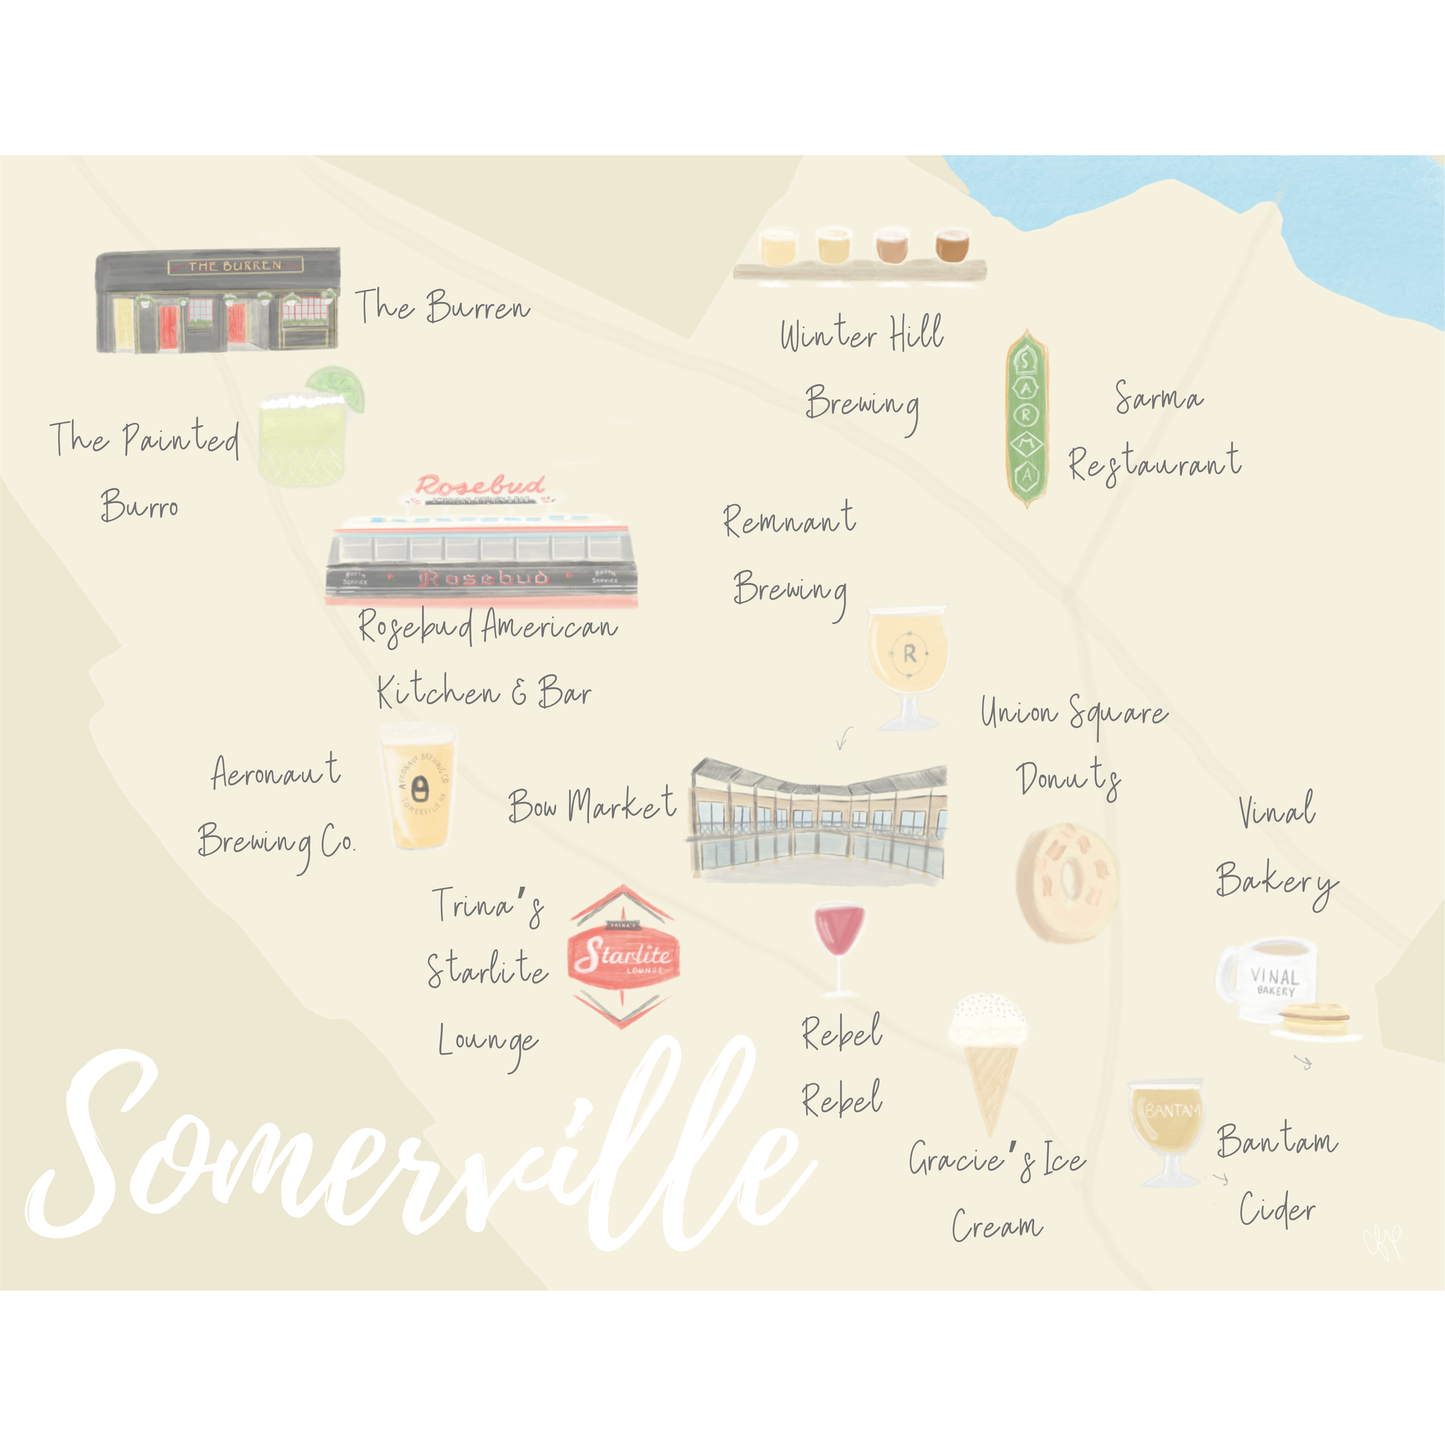 Somerville Map Print